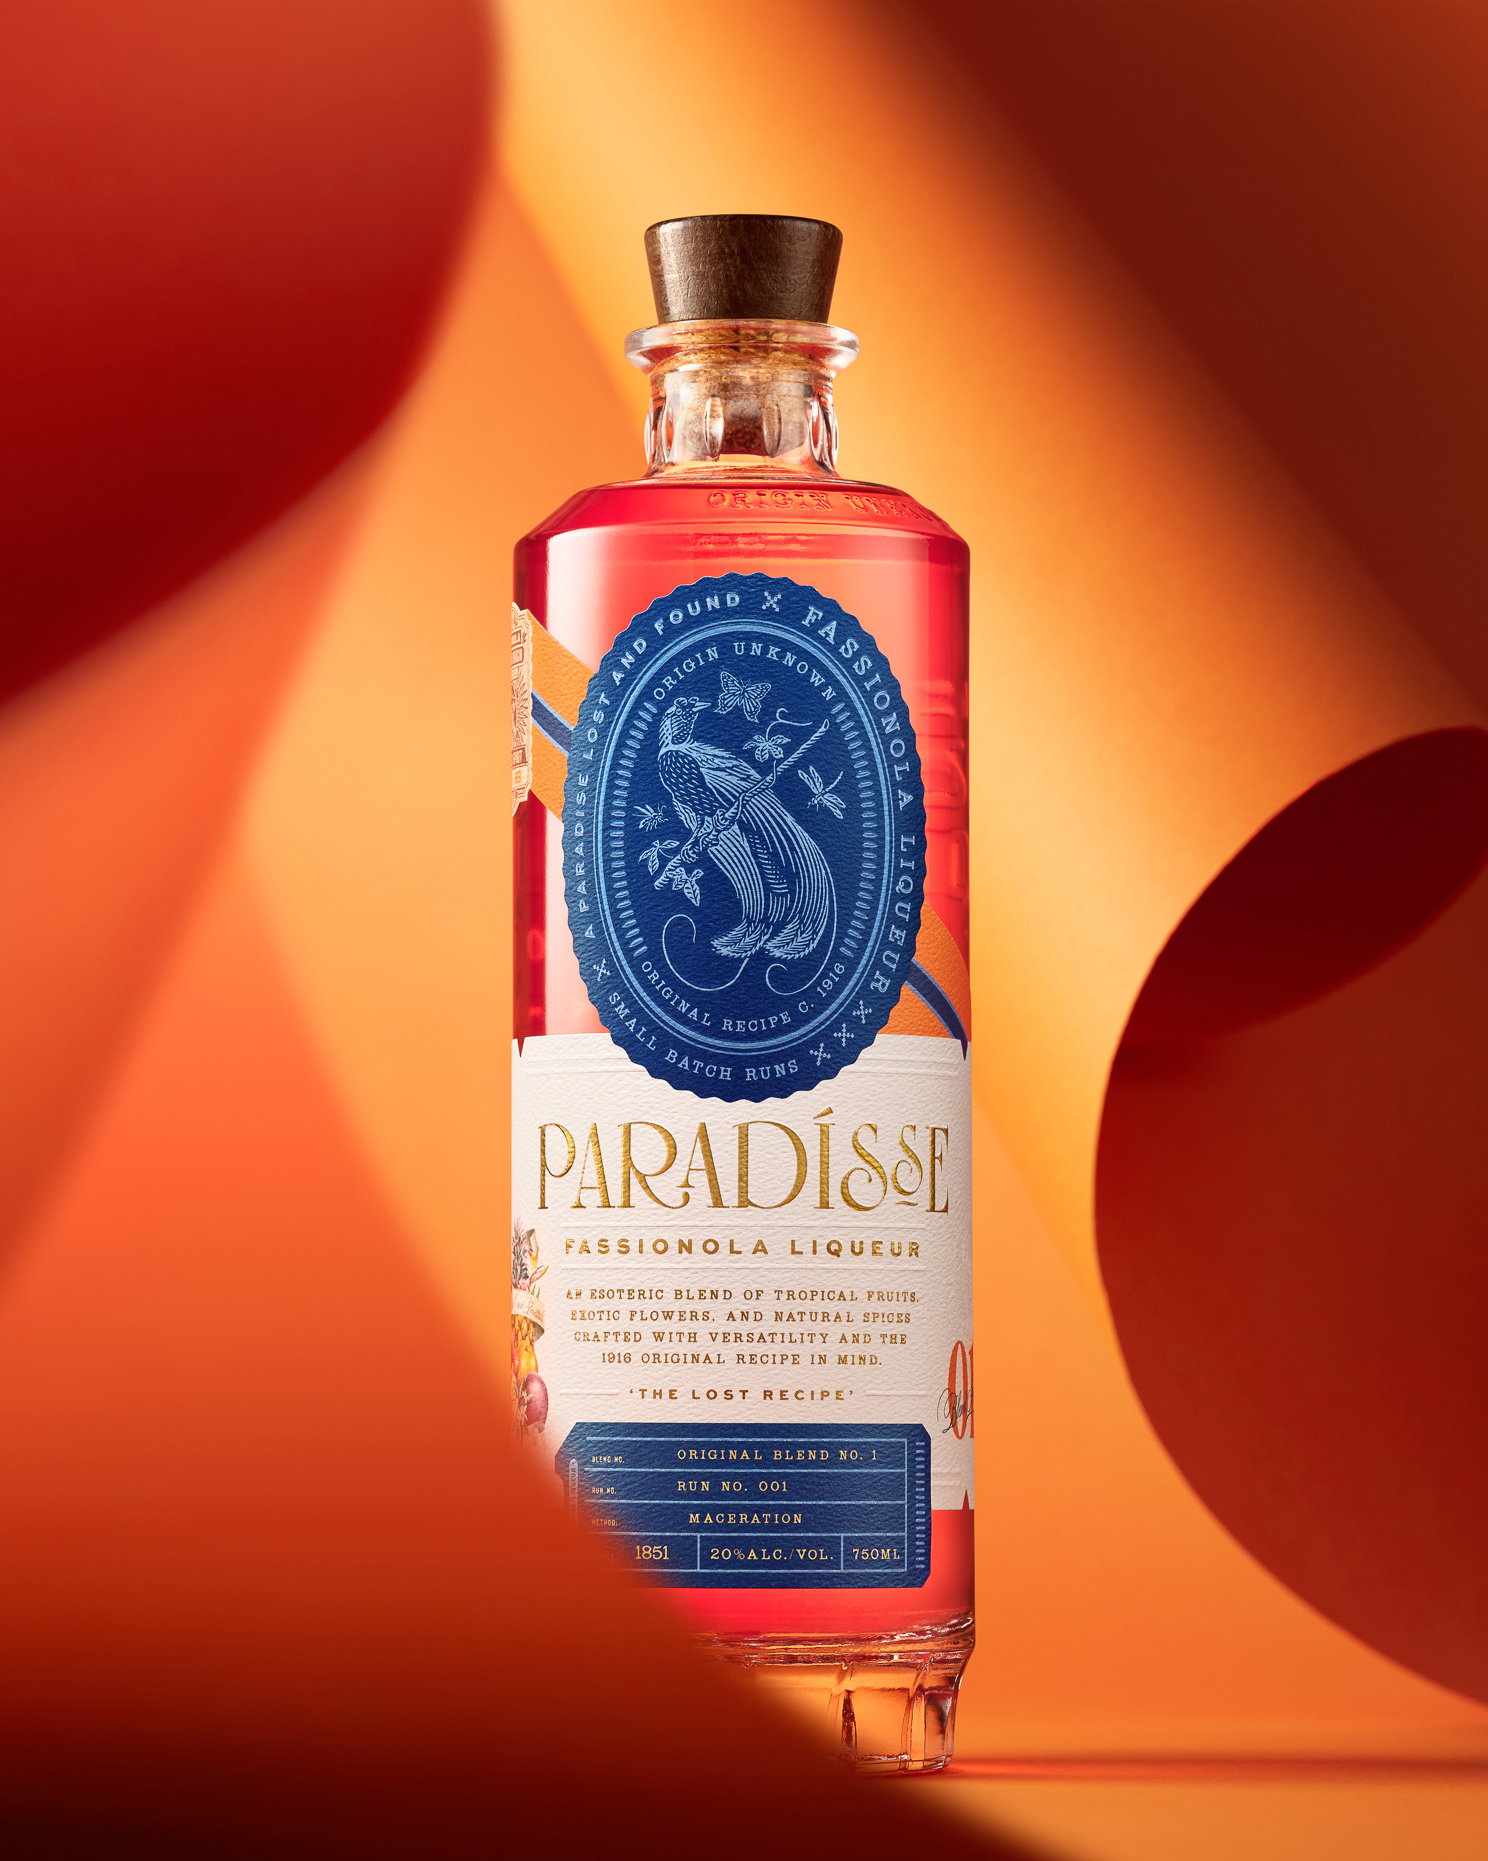 branding and package design for Paradisse Liqueur. Custom bottle and closure design.